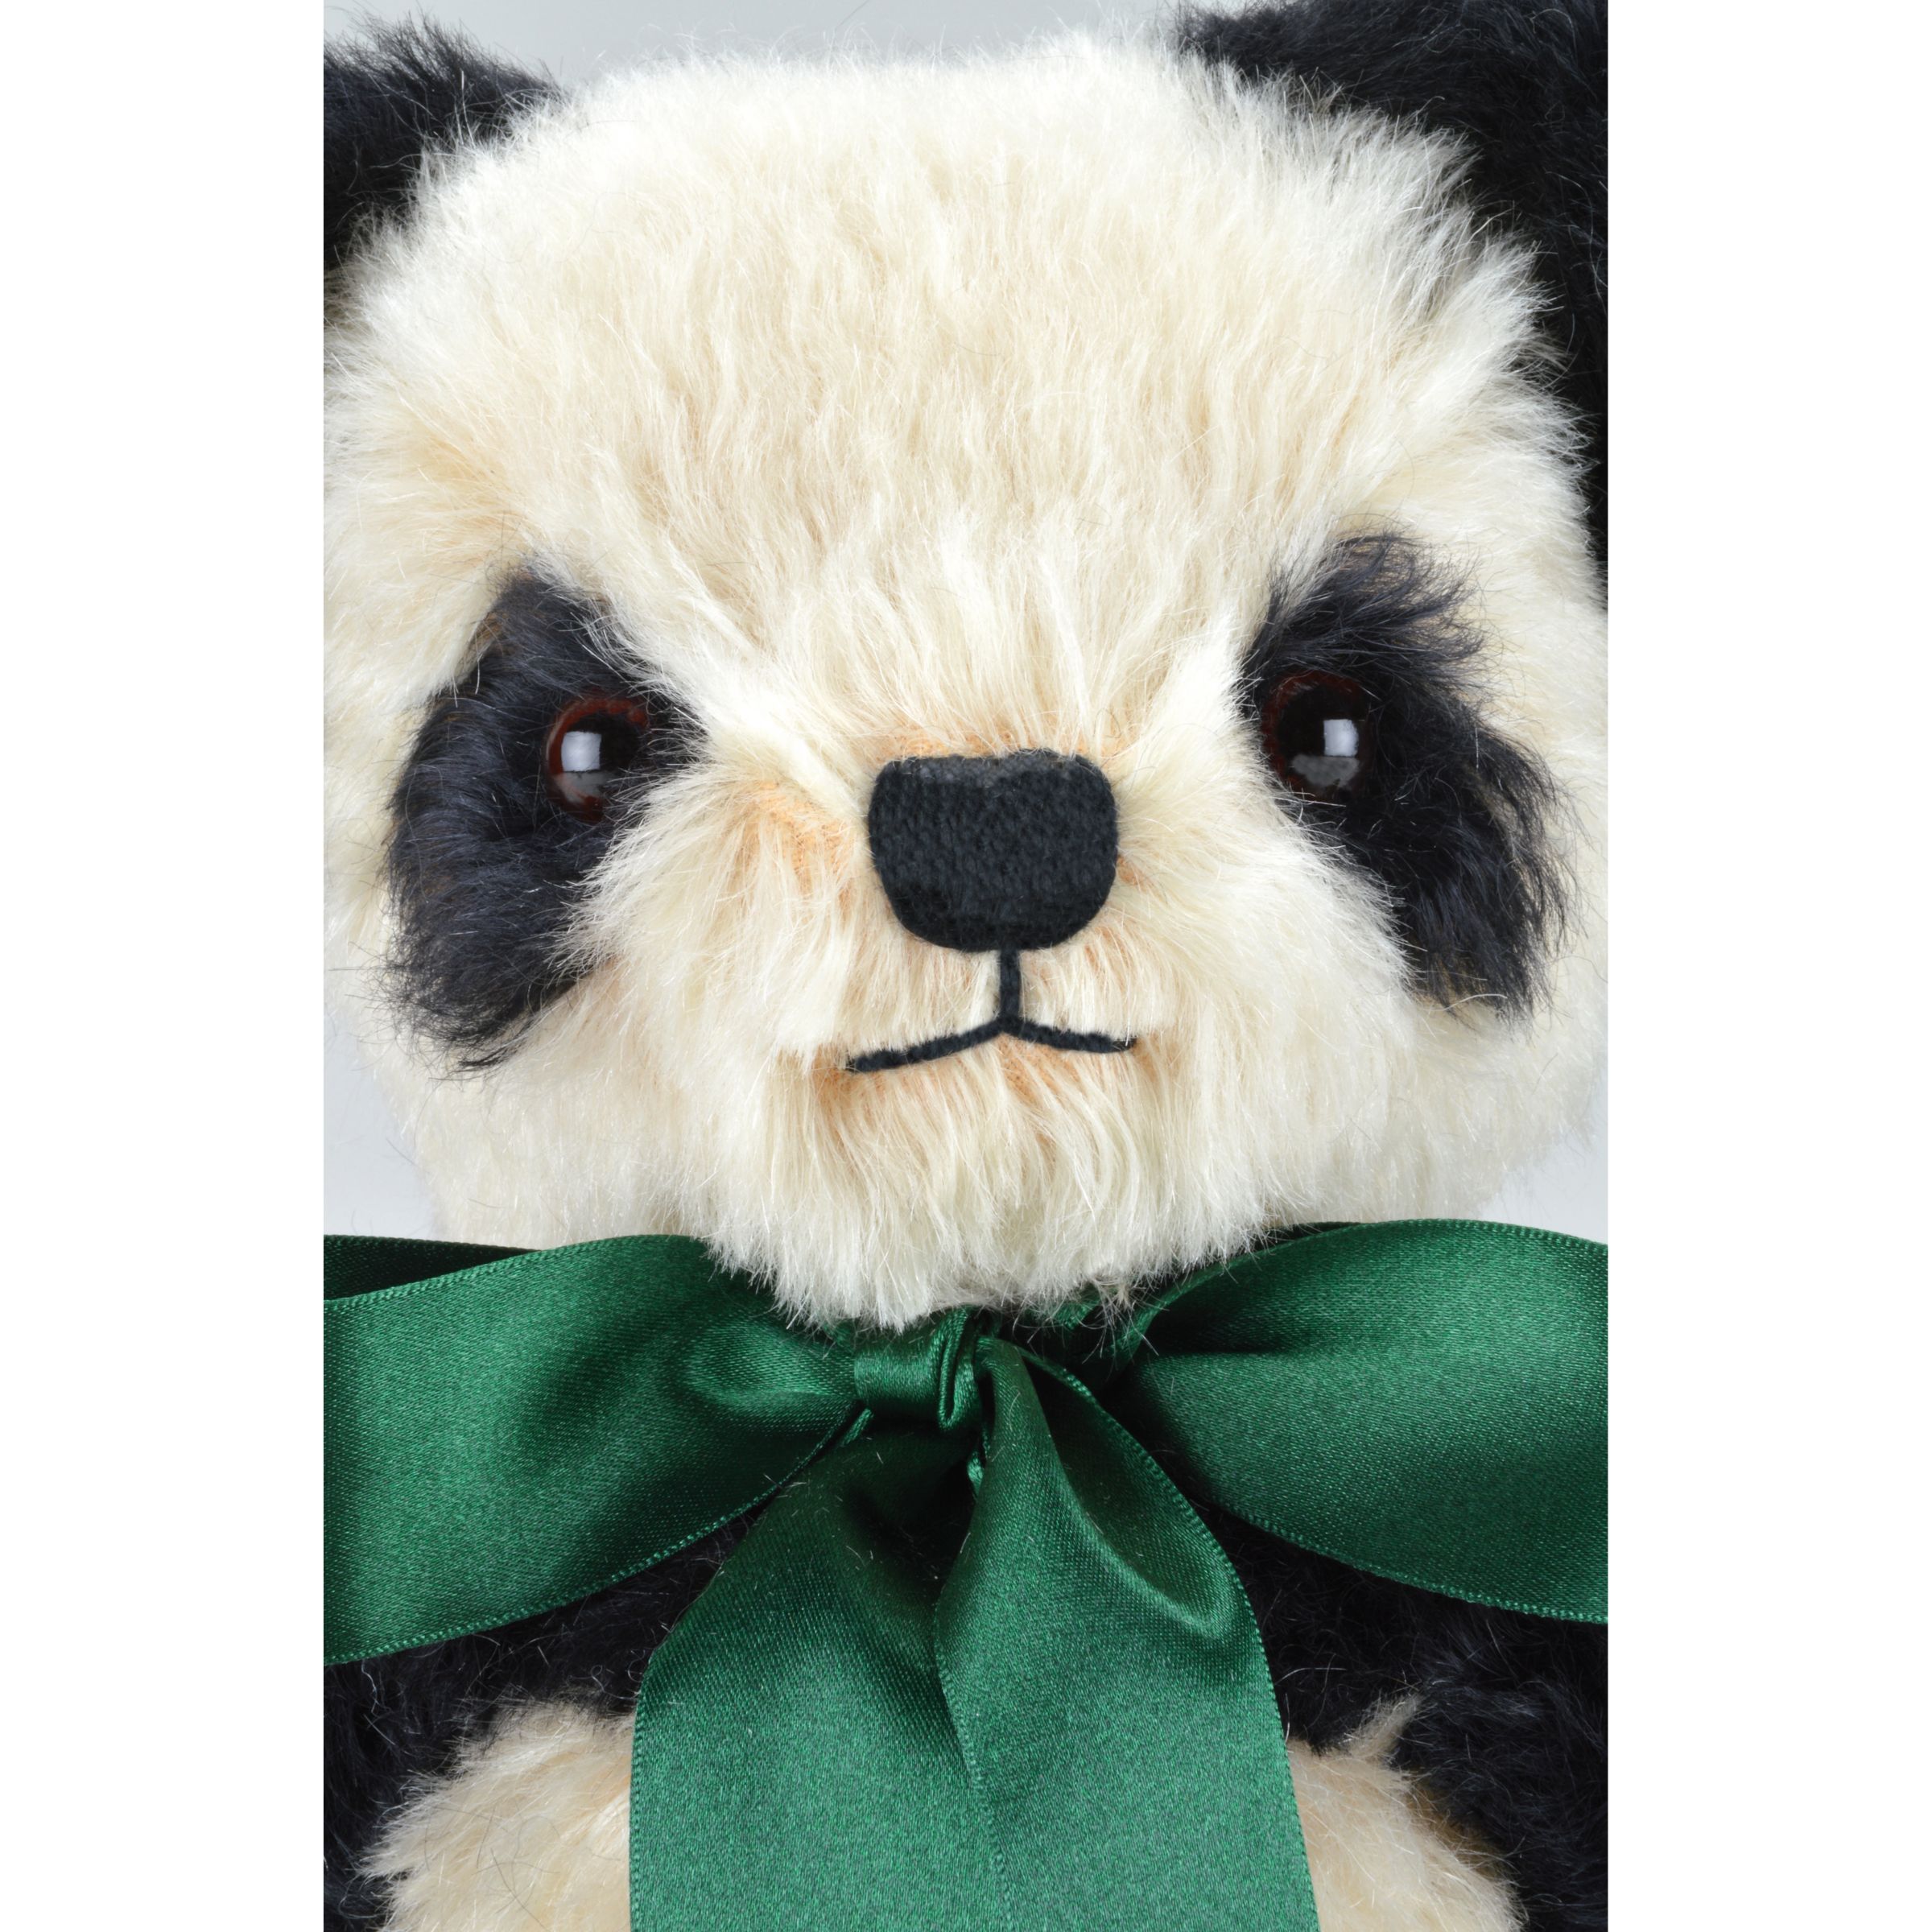 panda teddy online